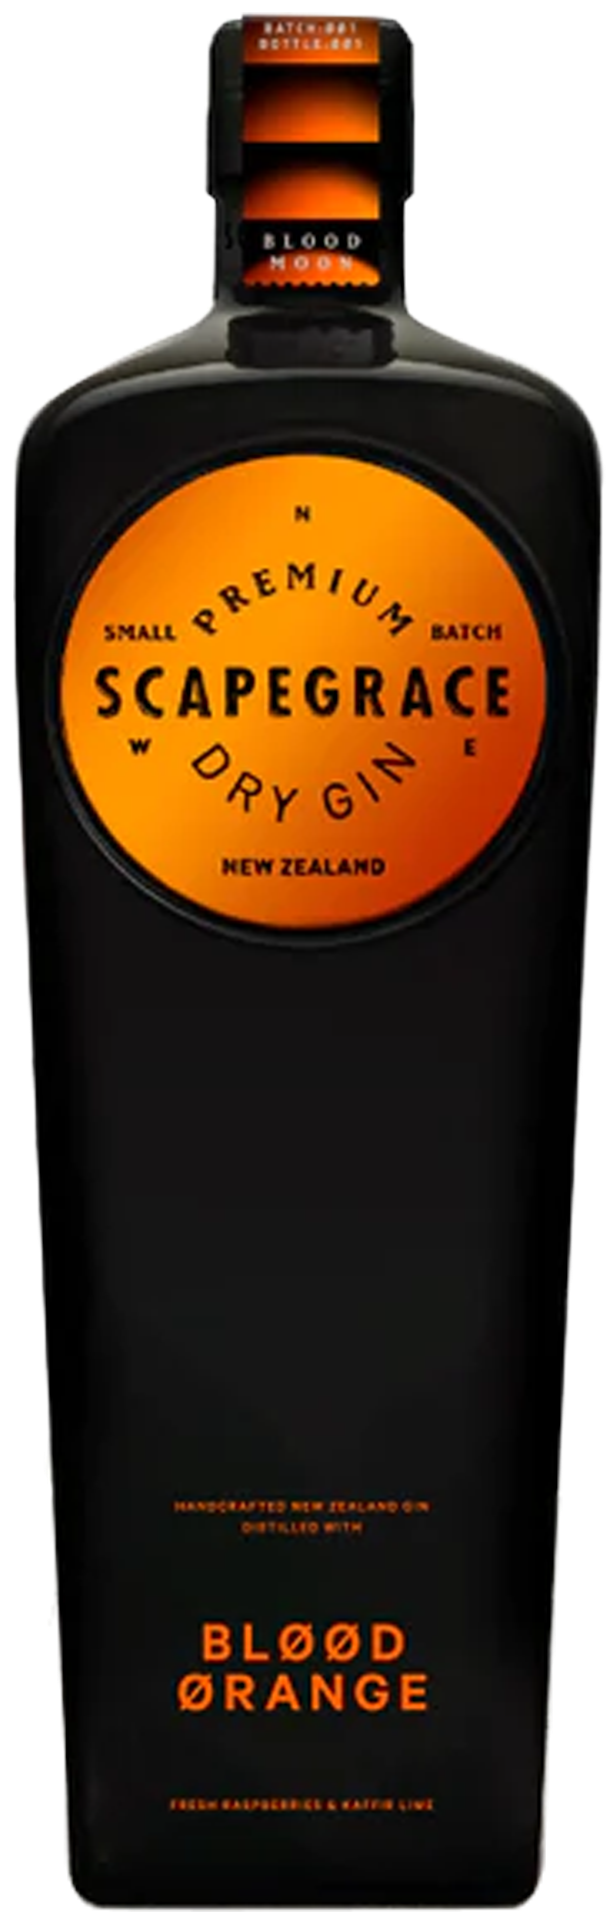 An image of a bottle of Scapegrace 'Blood Moon' Orange Gin 700ml